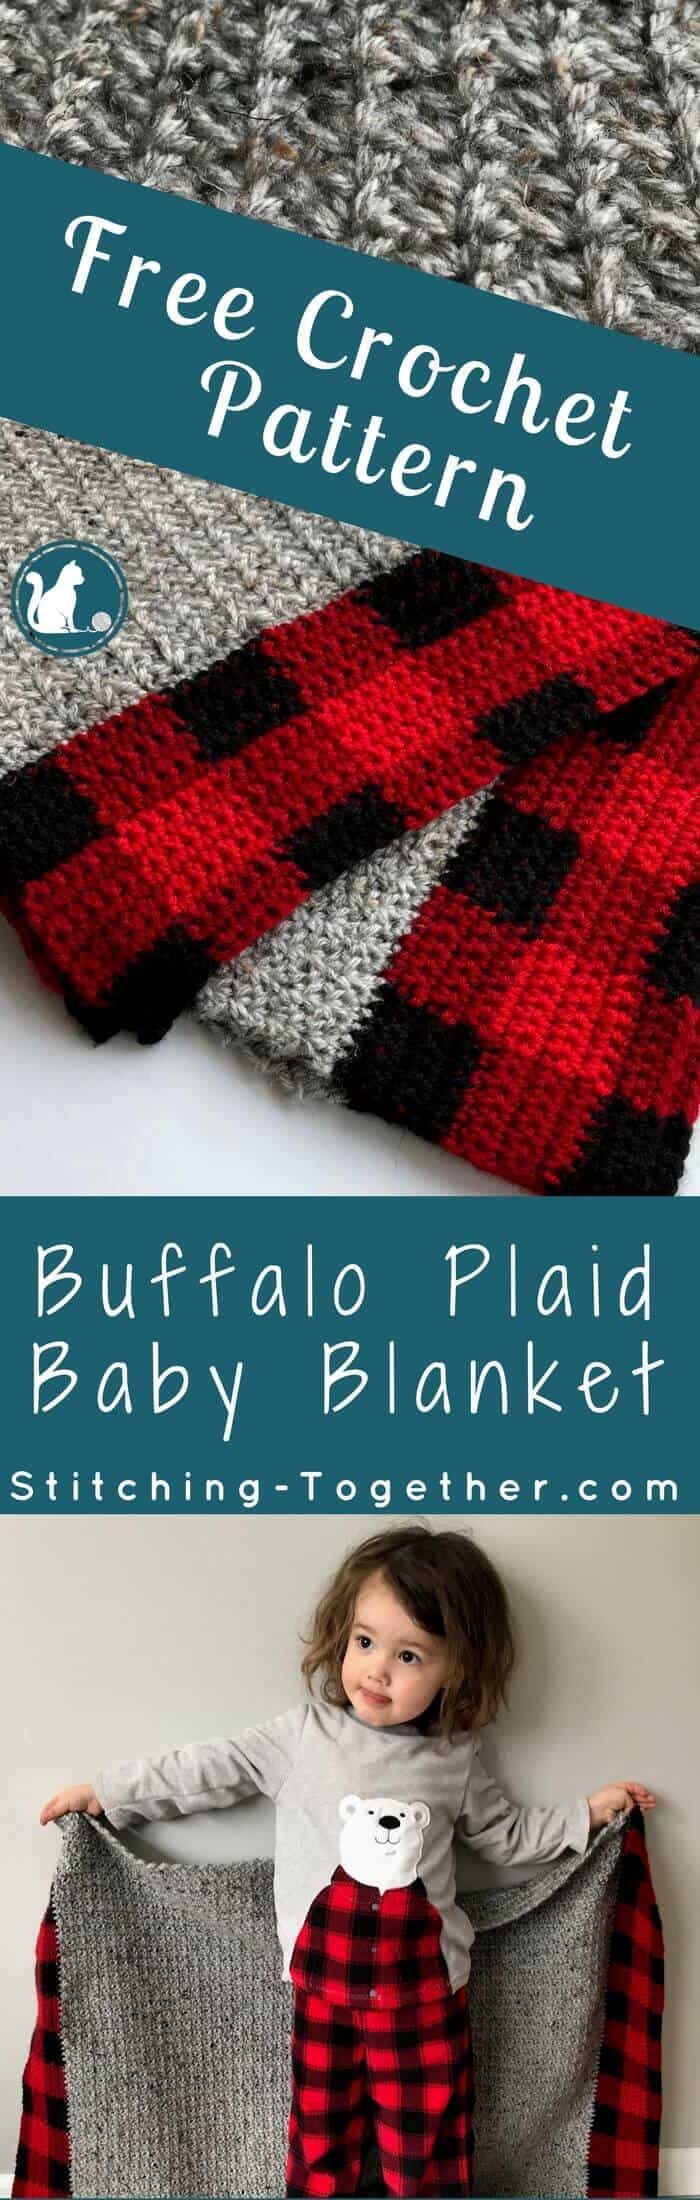 Buffalo Plaid Baby Blanket - Free Crochet Pattern ...